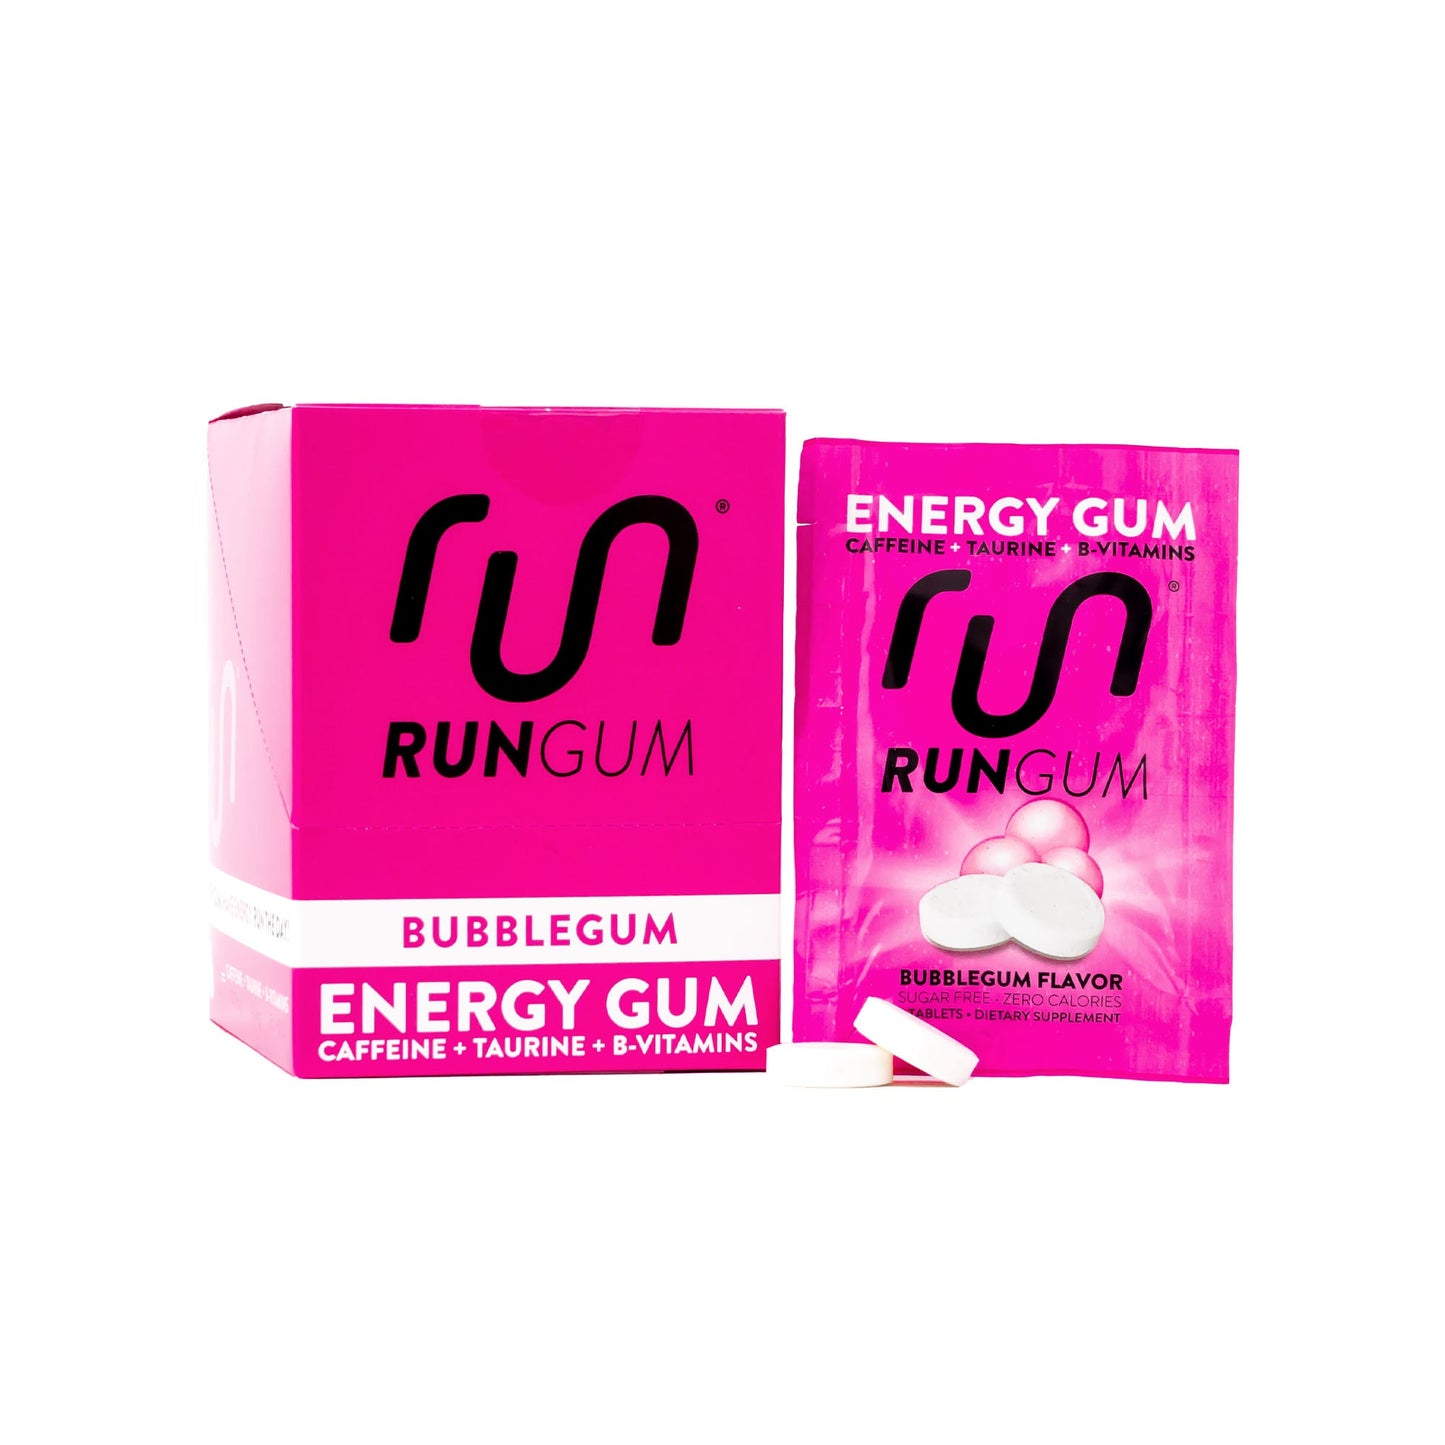 Energy Gum Original  Caffeine Chewing Gum by Run Gum for Athletes,  Runners, Entrepreneurs